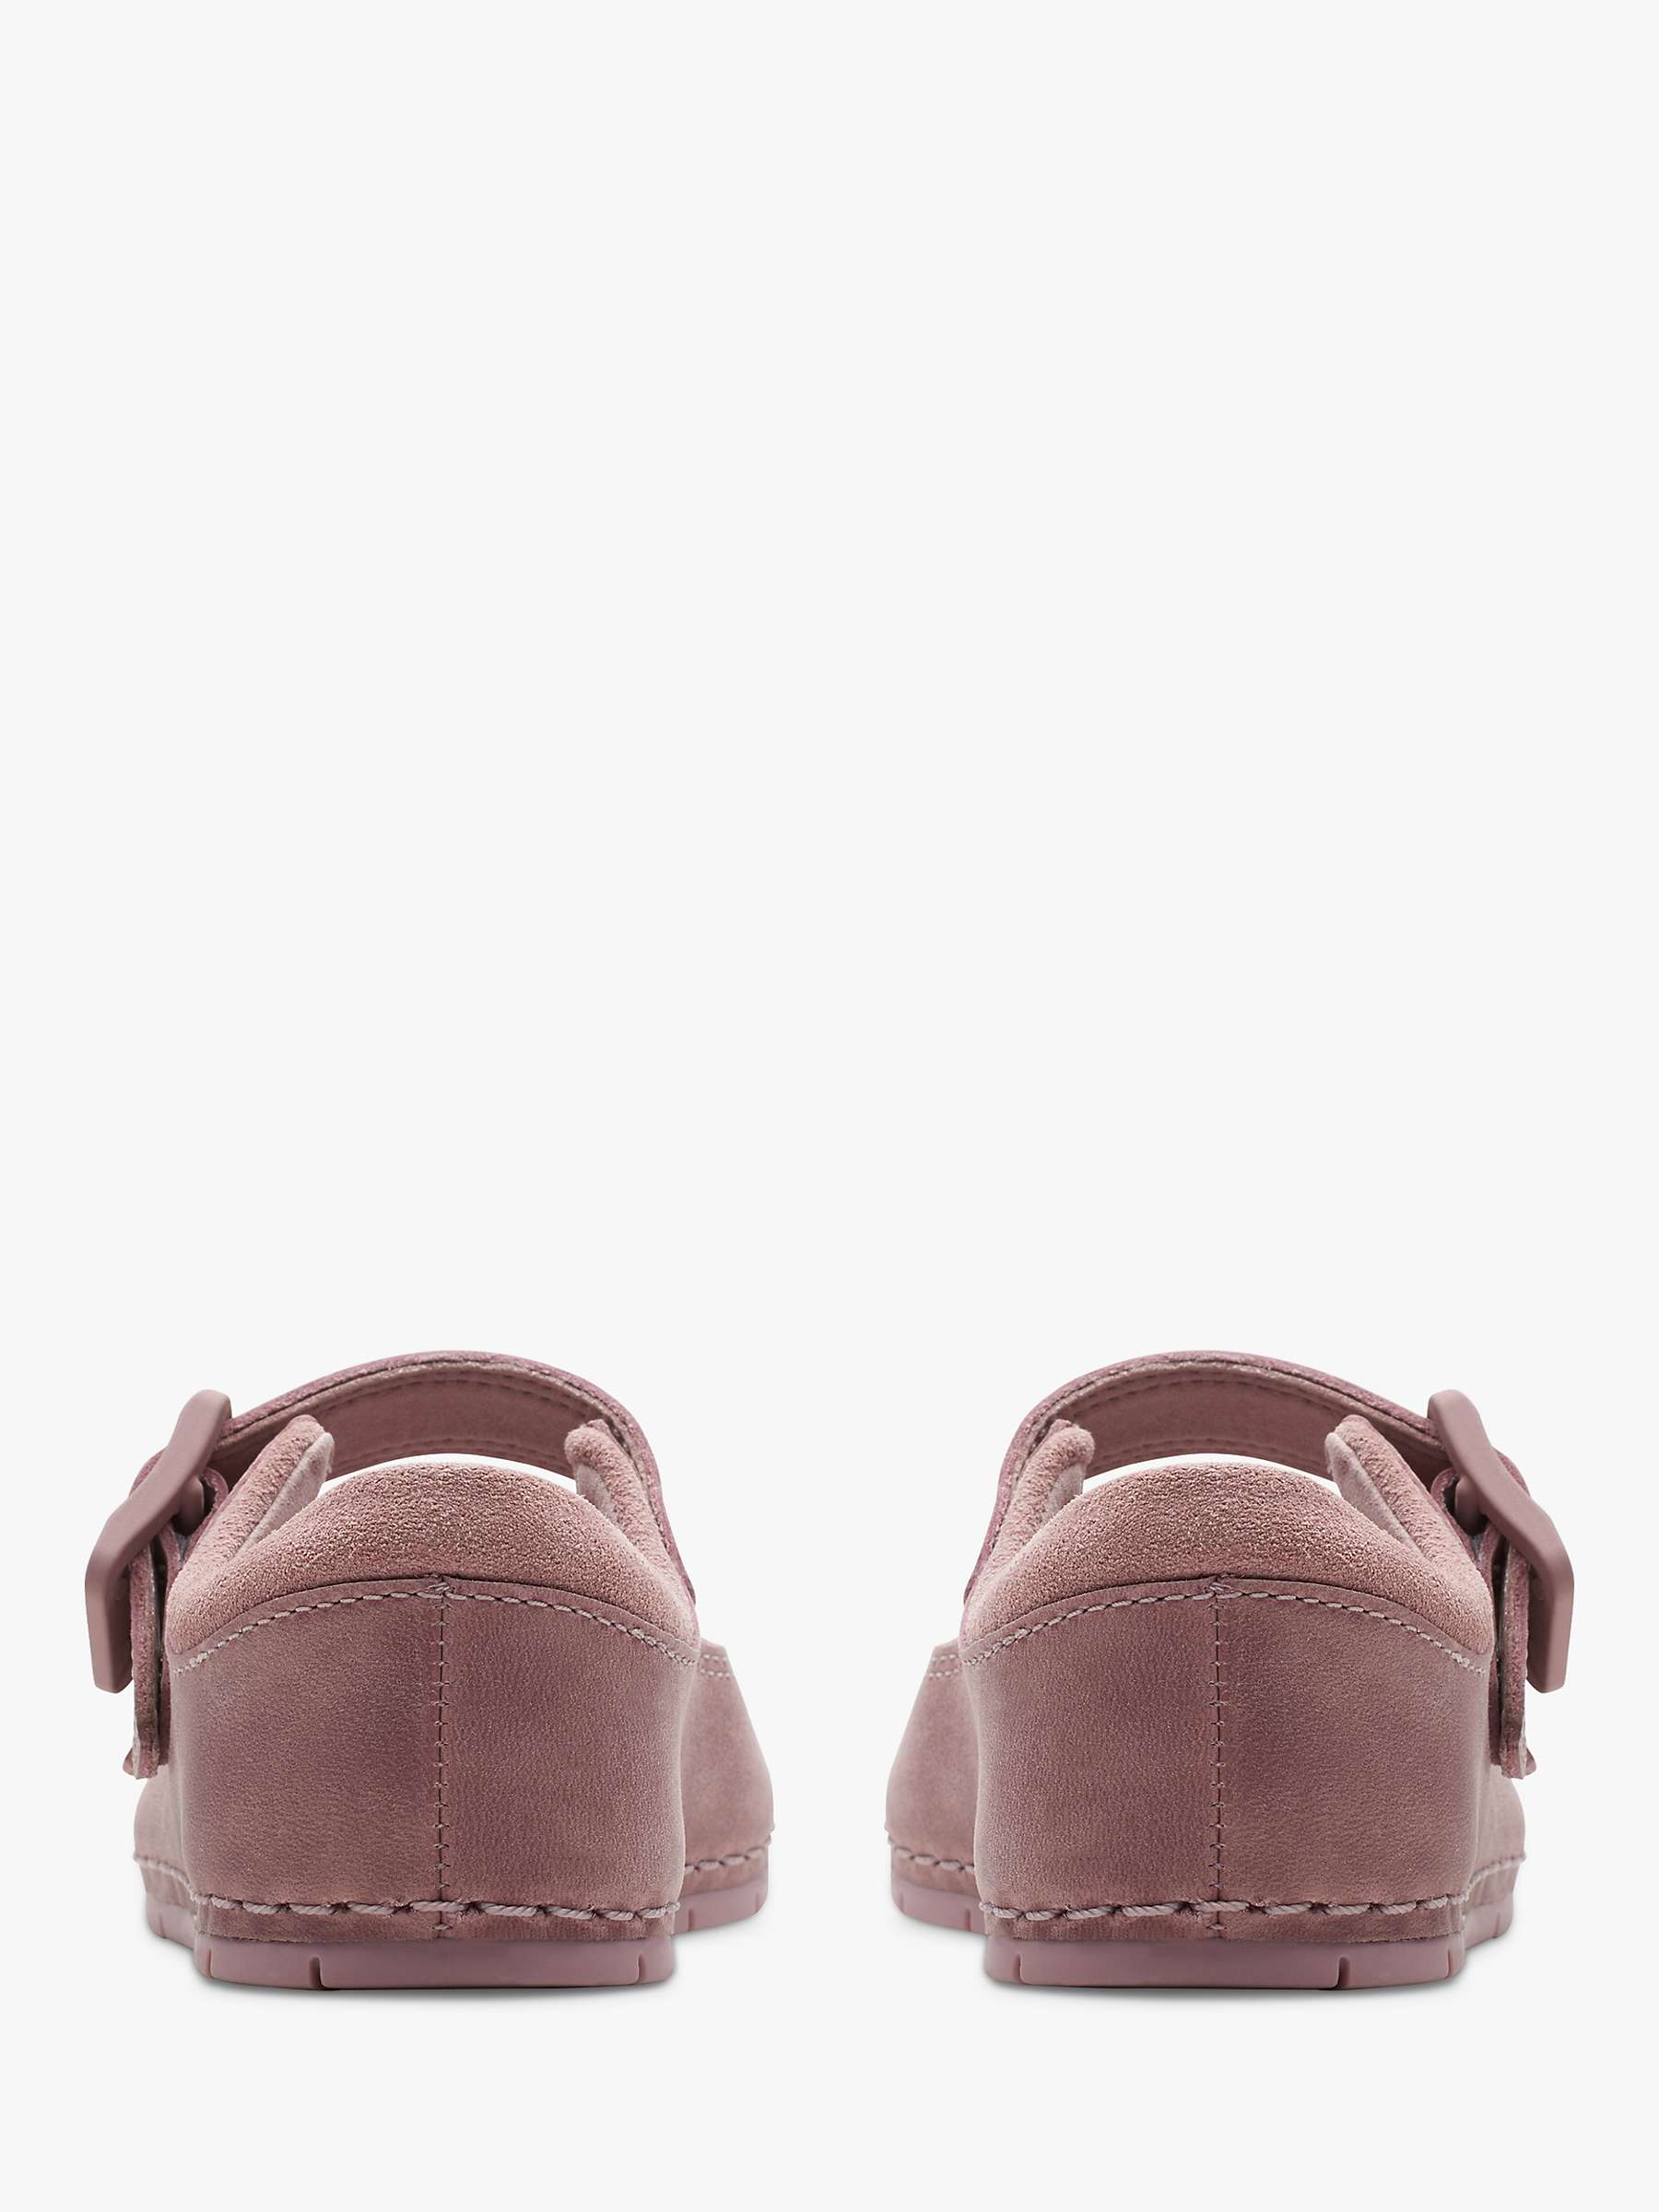 Buy Clarks Kids' Baha Beach Leather Sandals Online at johnlewis.com